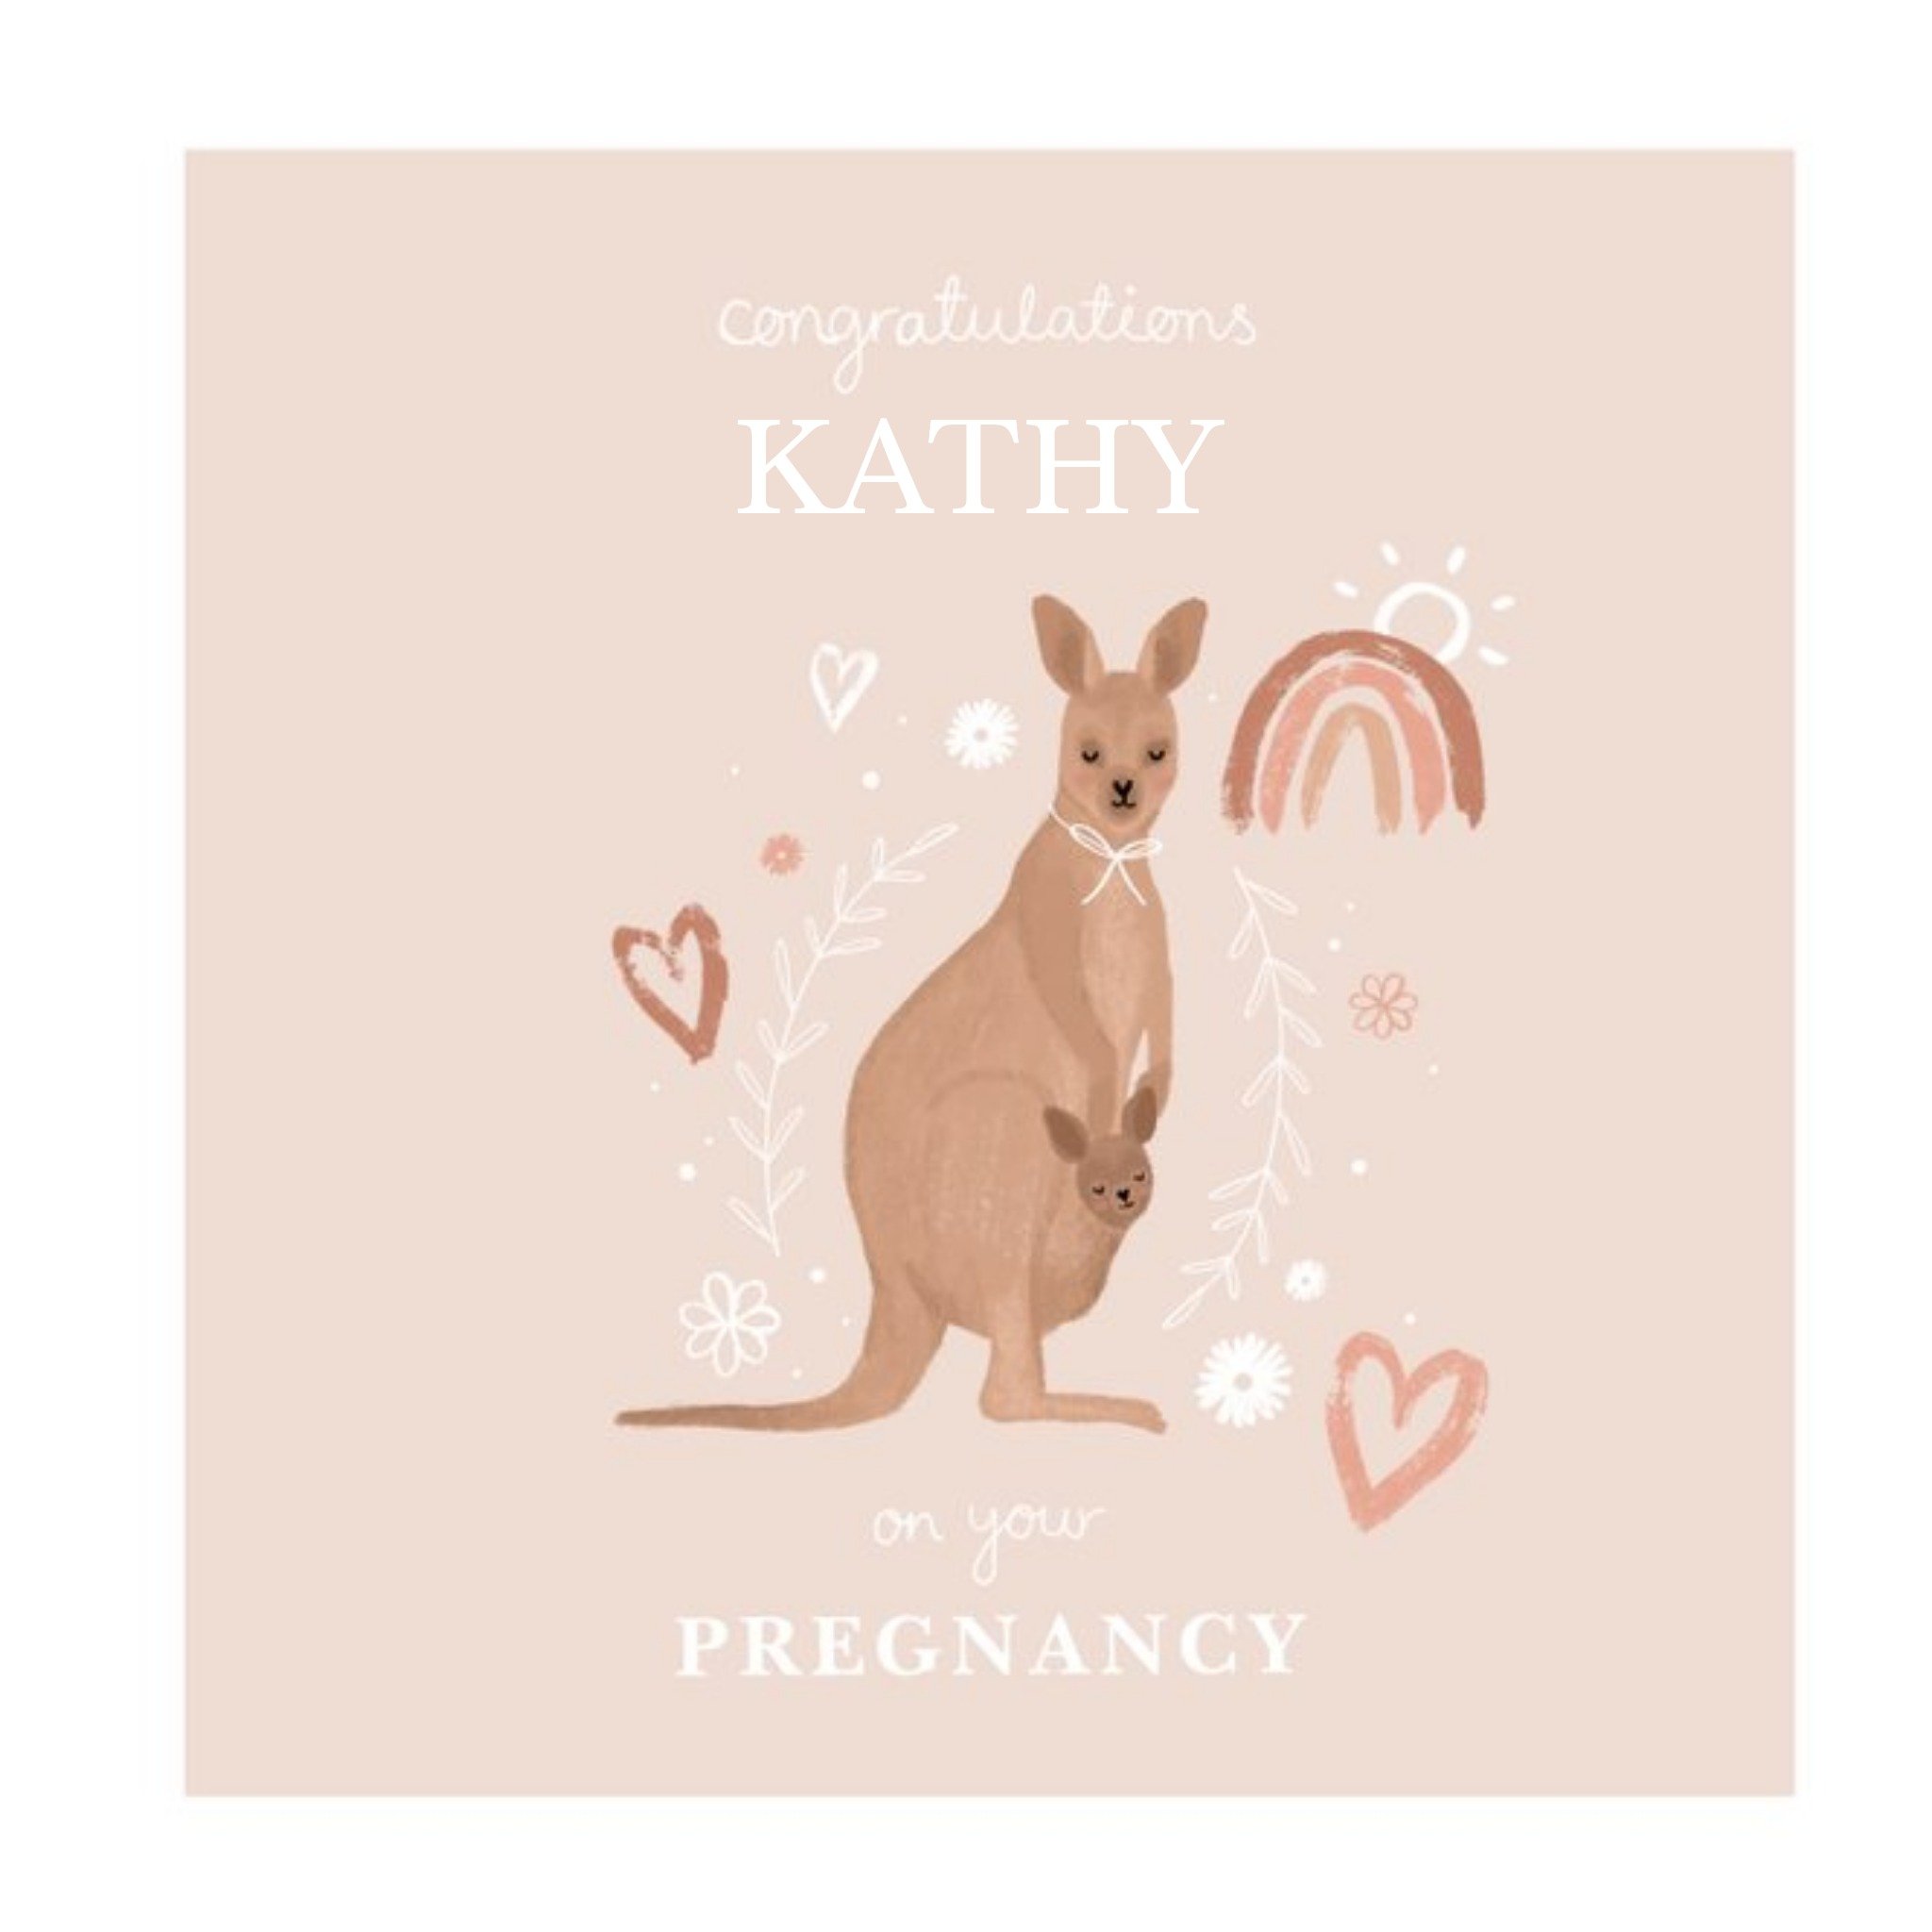 Moonpig Millicent Venton Illustrated Kangaroo Pregnancy Card, Square